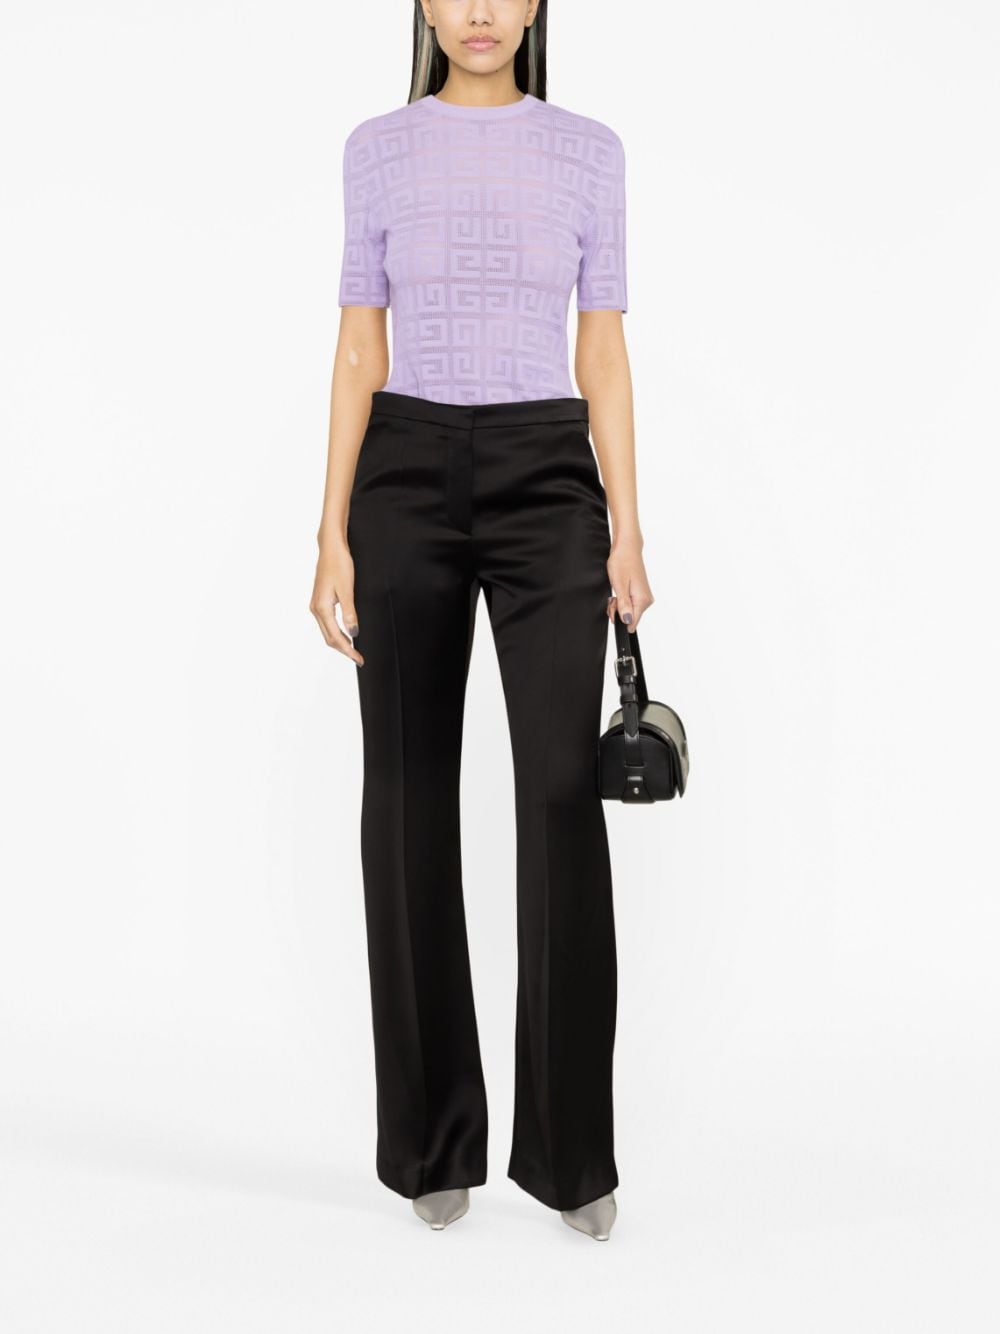 Givenchy Flared broek Zwart